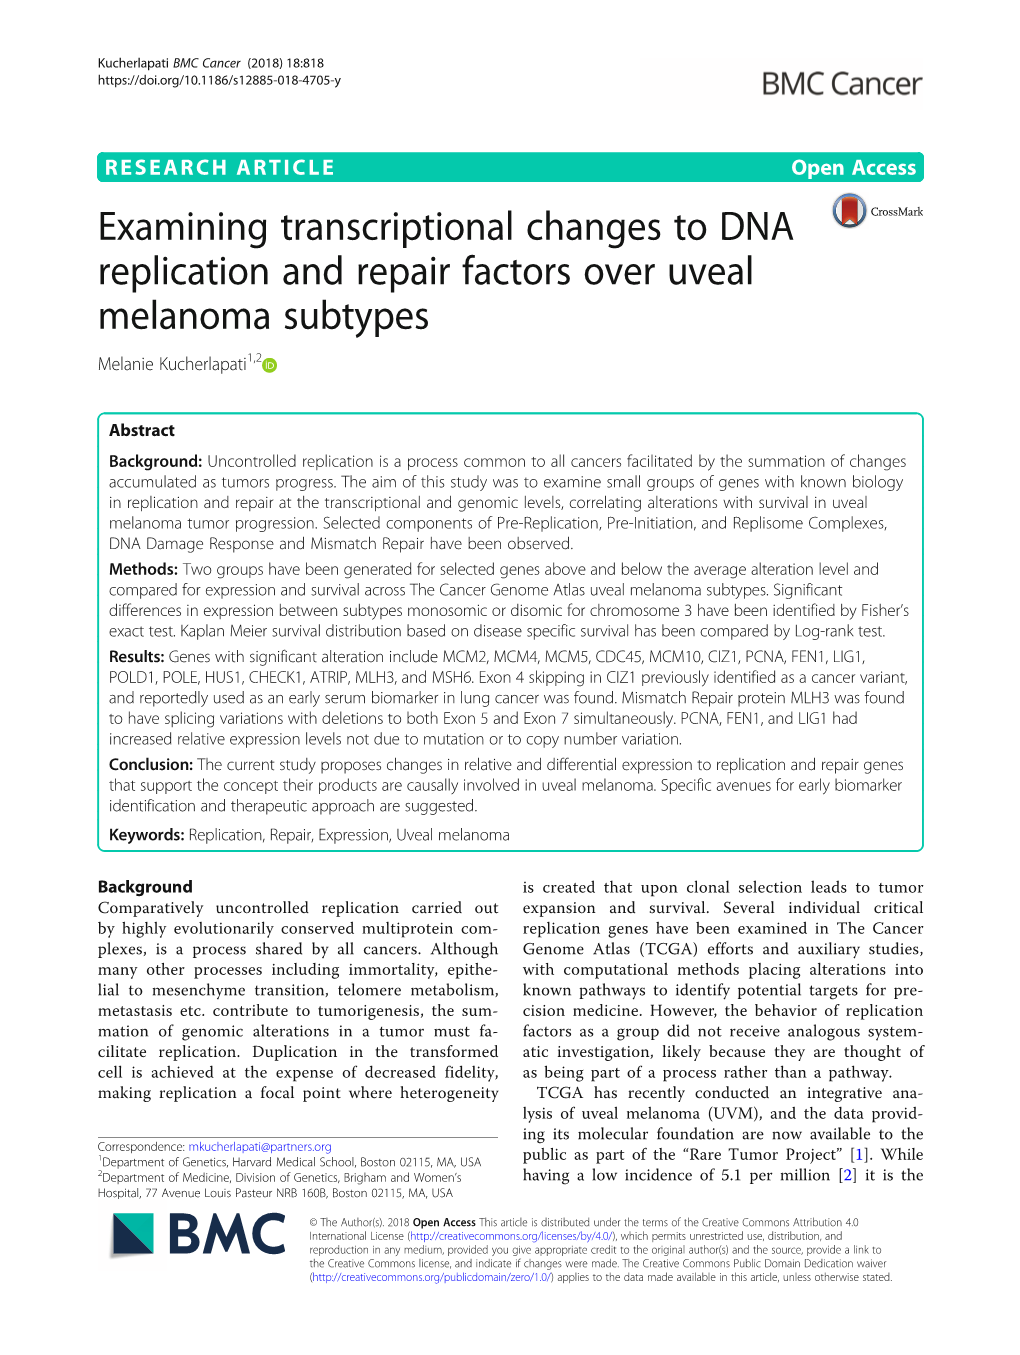 Examining Transcriptional Changes to DNA Replication and Repair Factors Over Uveal Melanoma Subtypes Melanie Kucherlapati1,2